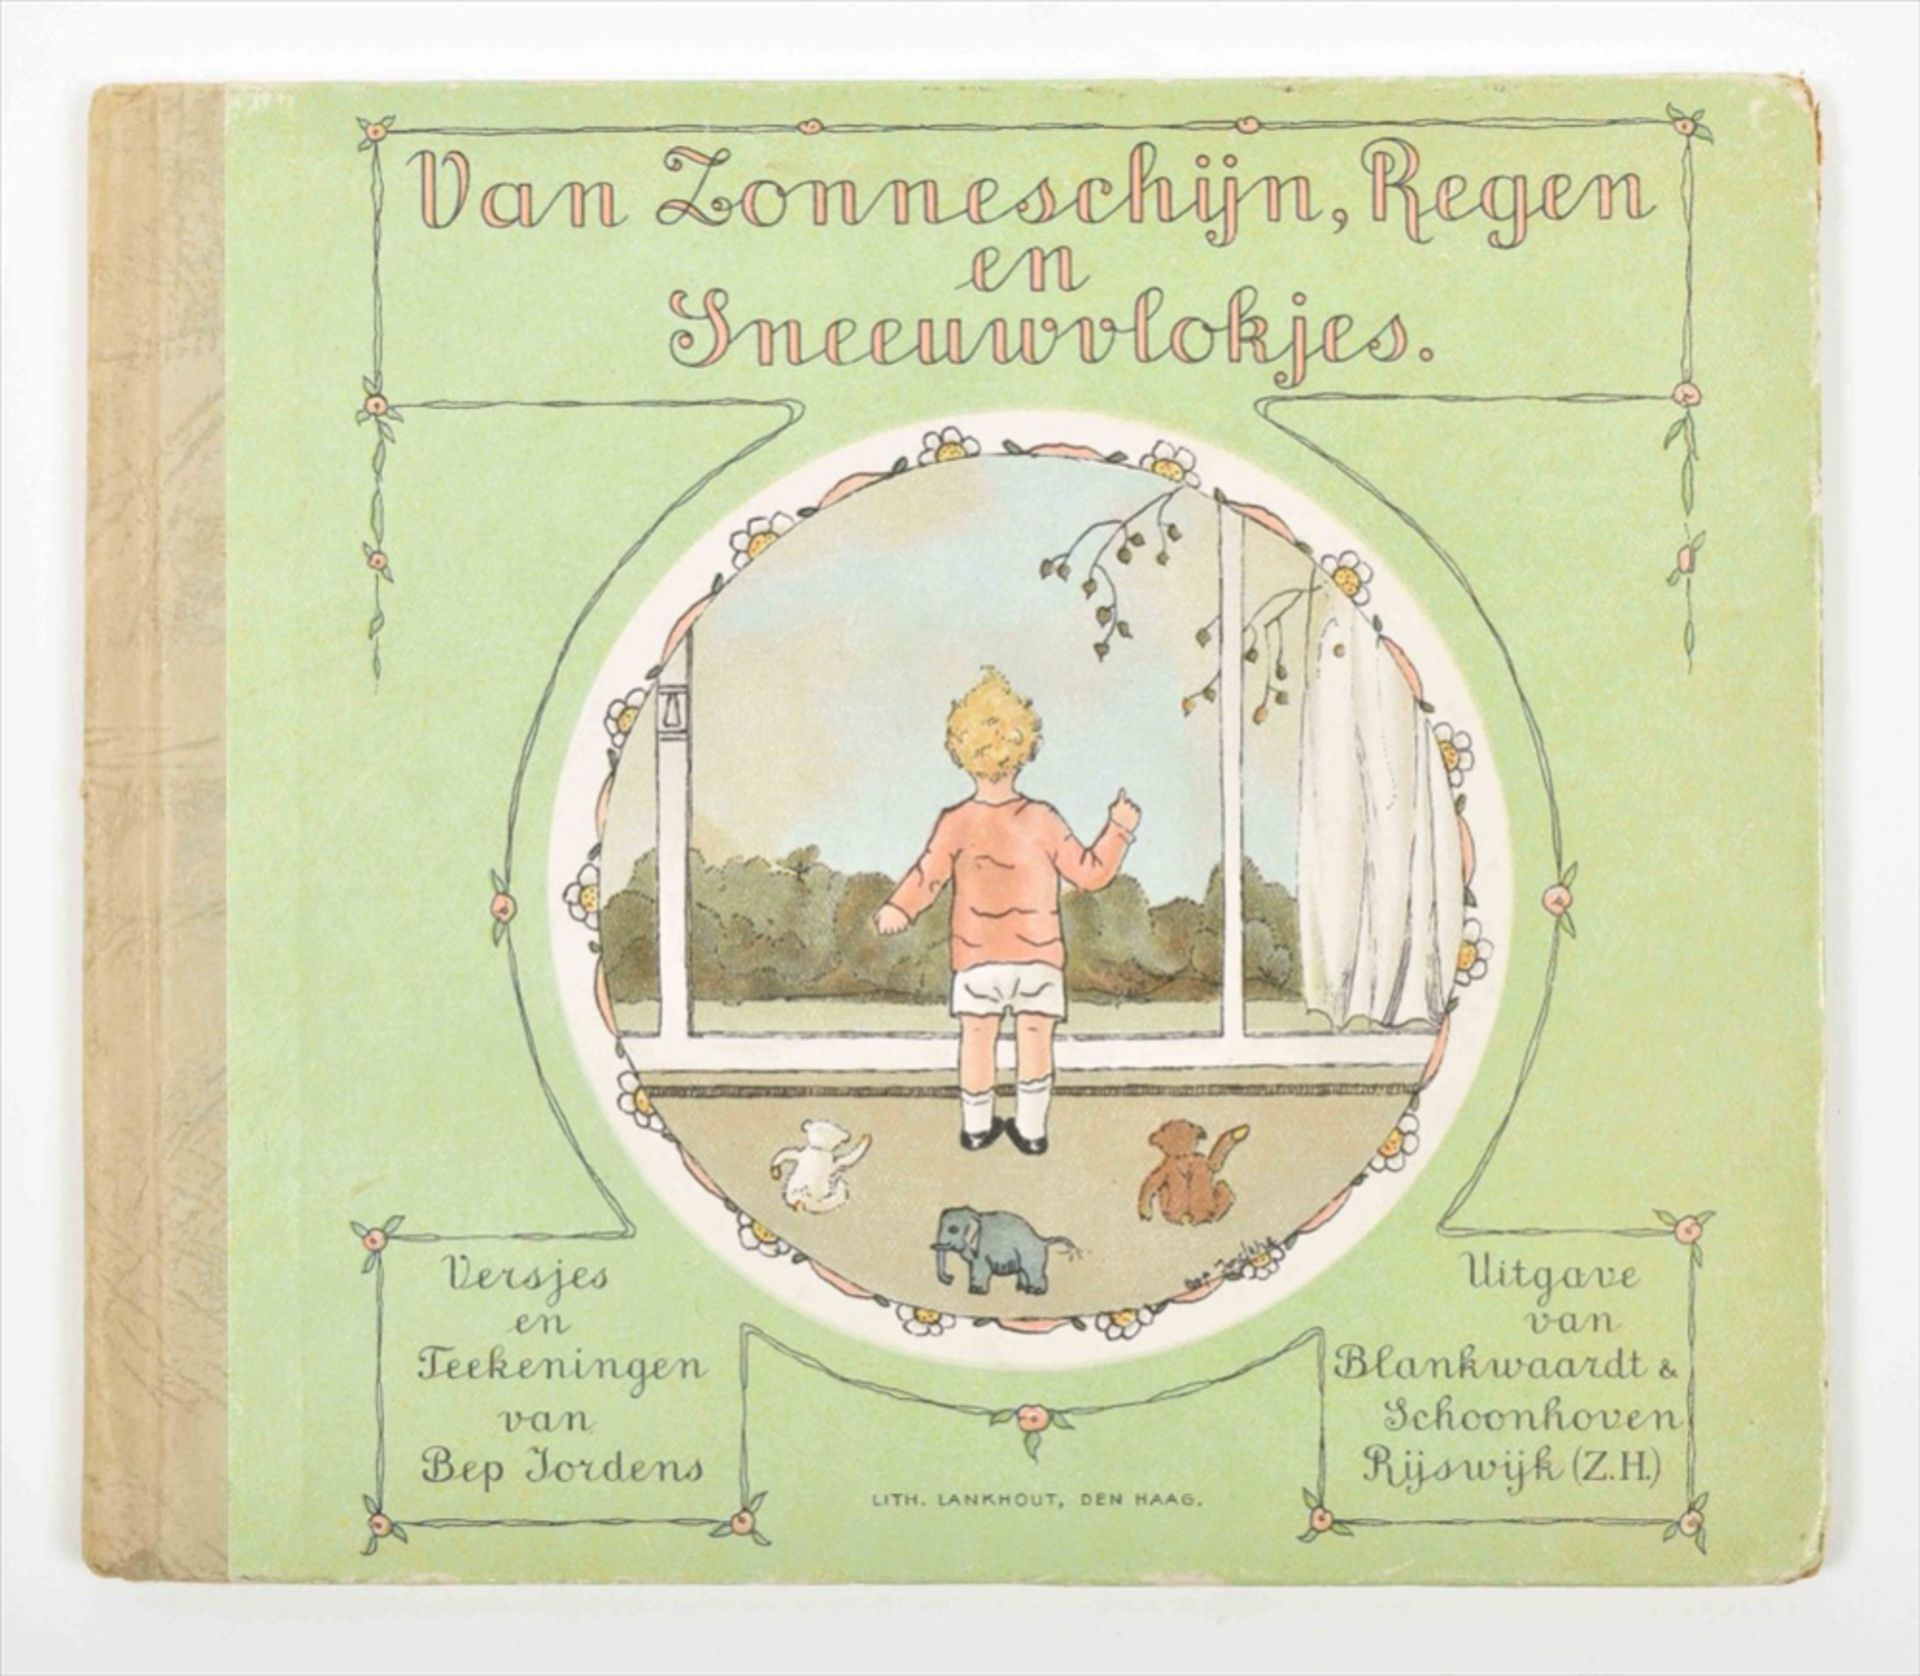 Seven children's books illustrated by Bep Jordens - Image 16 of 20